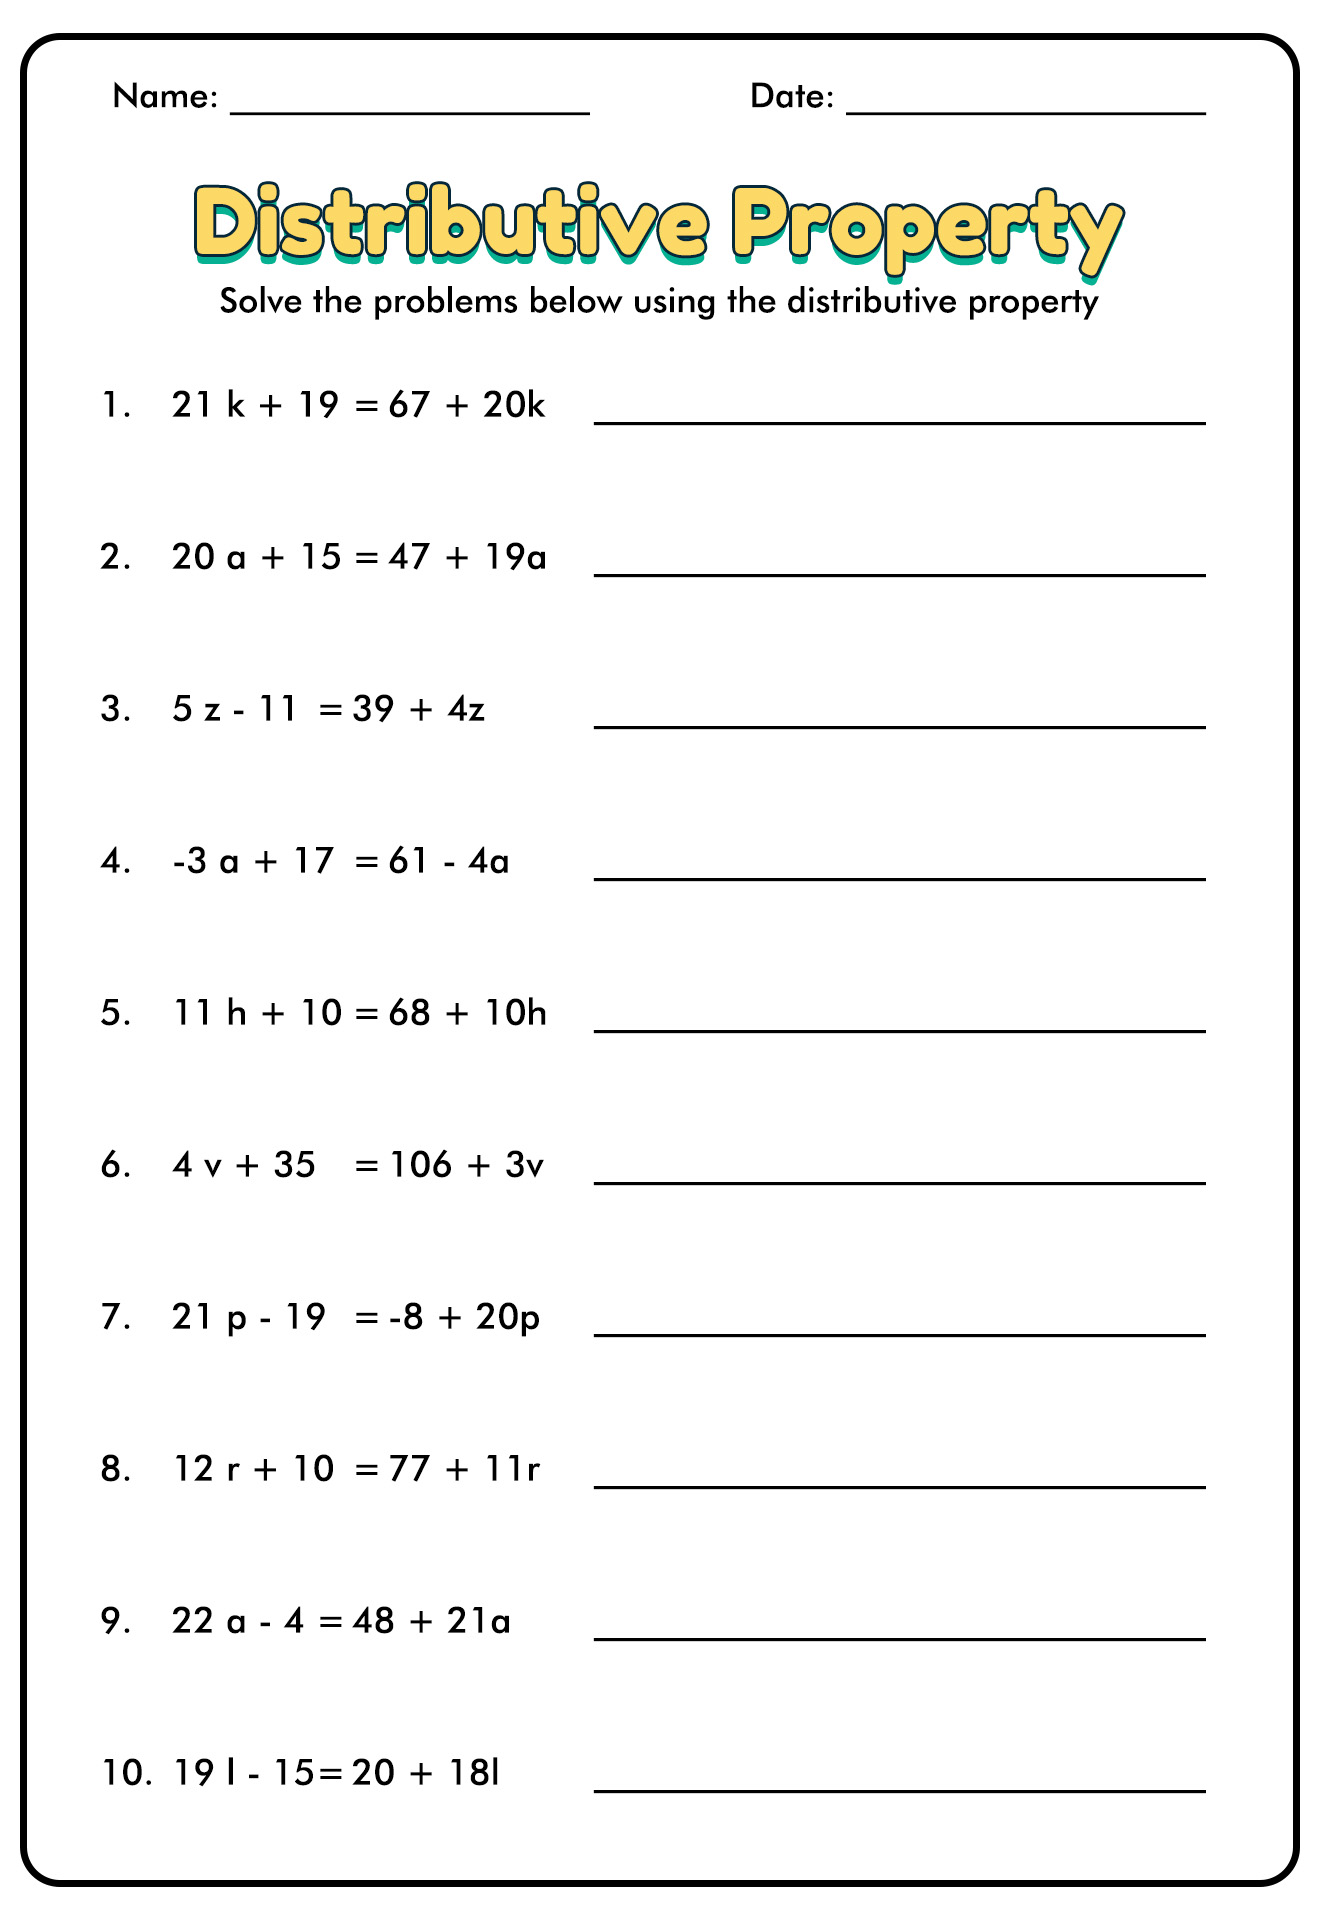 Distributive Property Of Multiplication Worksheets 6th Grade The Distributive Property 